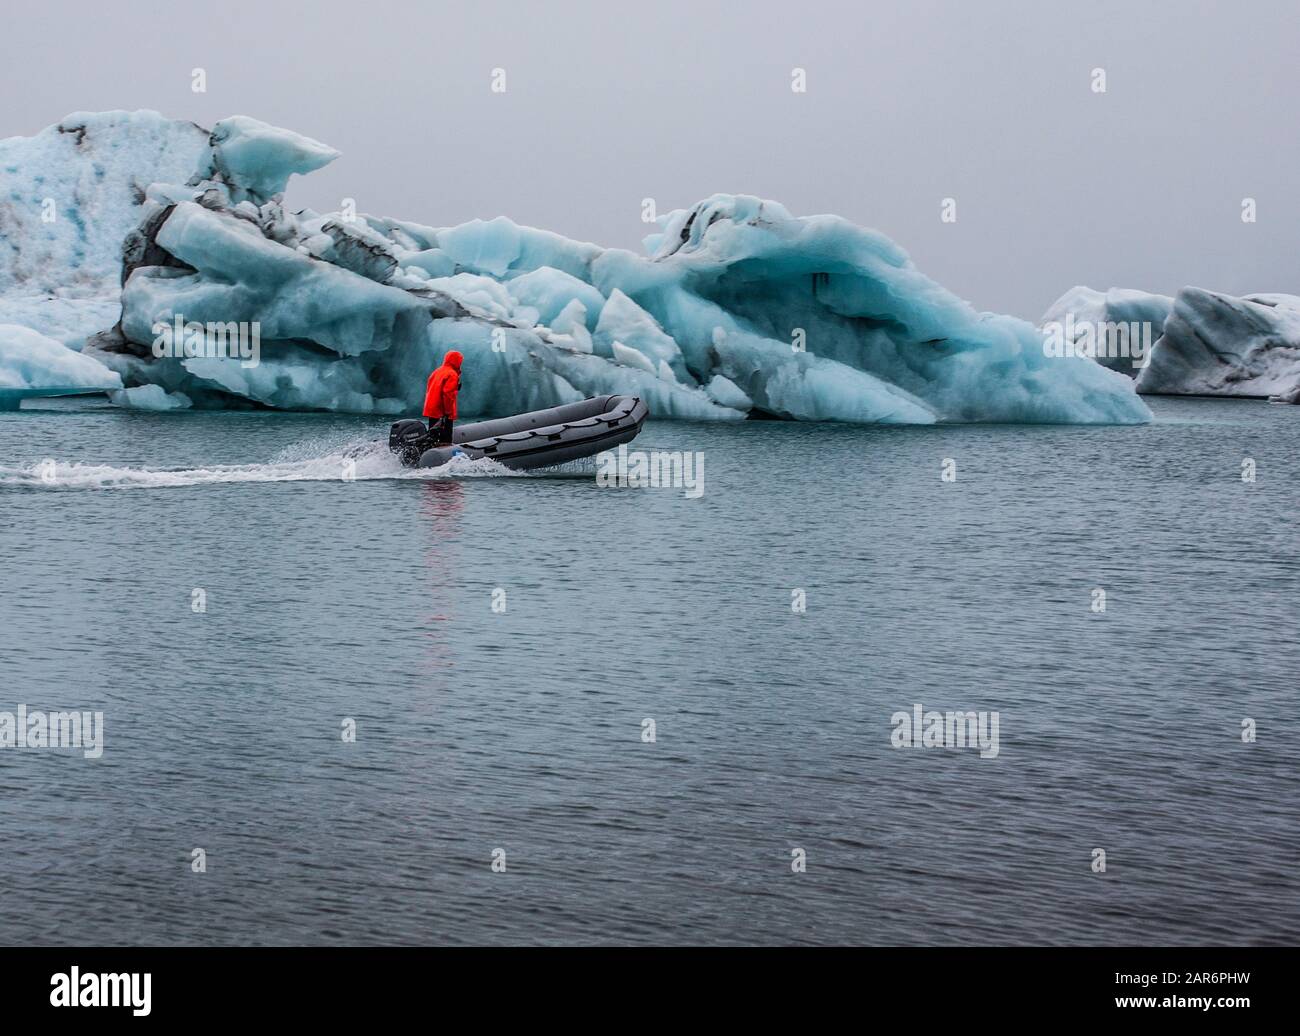 Man with red jacket on a motorized zodiac tour boat, pontoon, raft, Iceland, Europe  Jokulsarlon Glacier Lagoon, East Iceland ice diamond beach Stock Photo